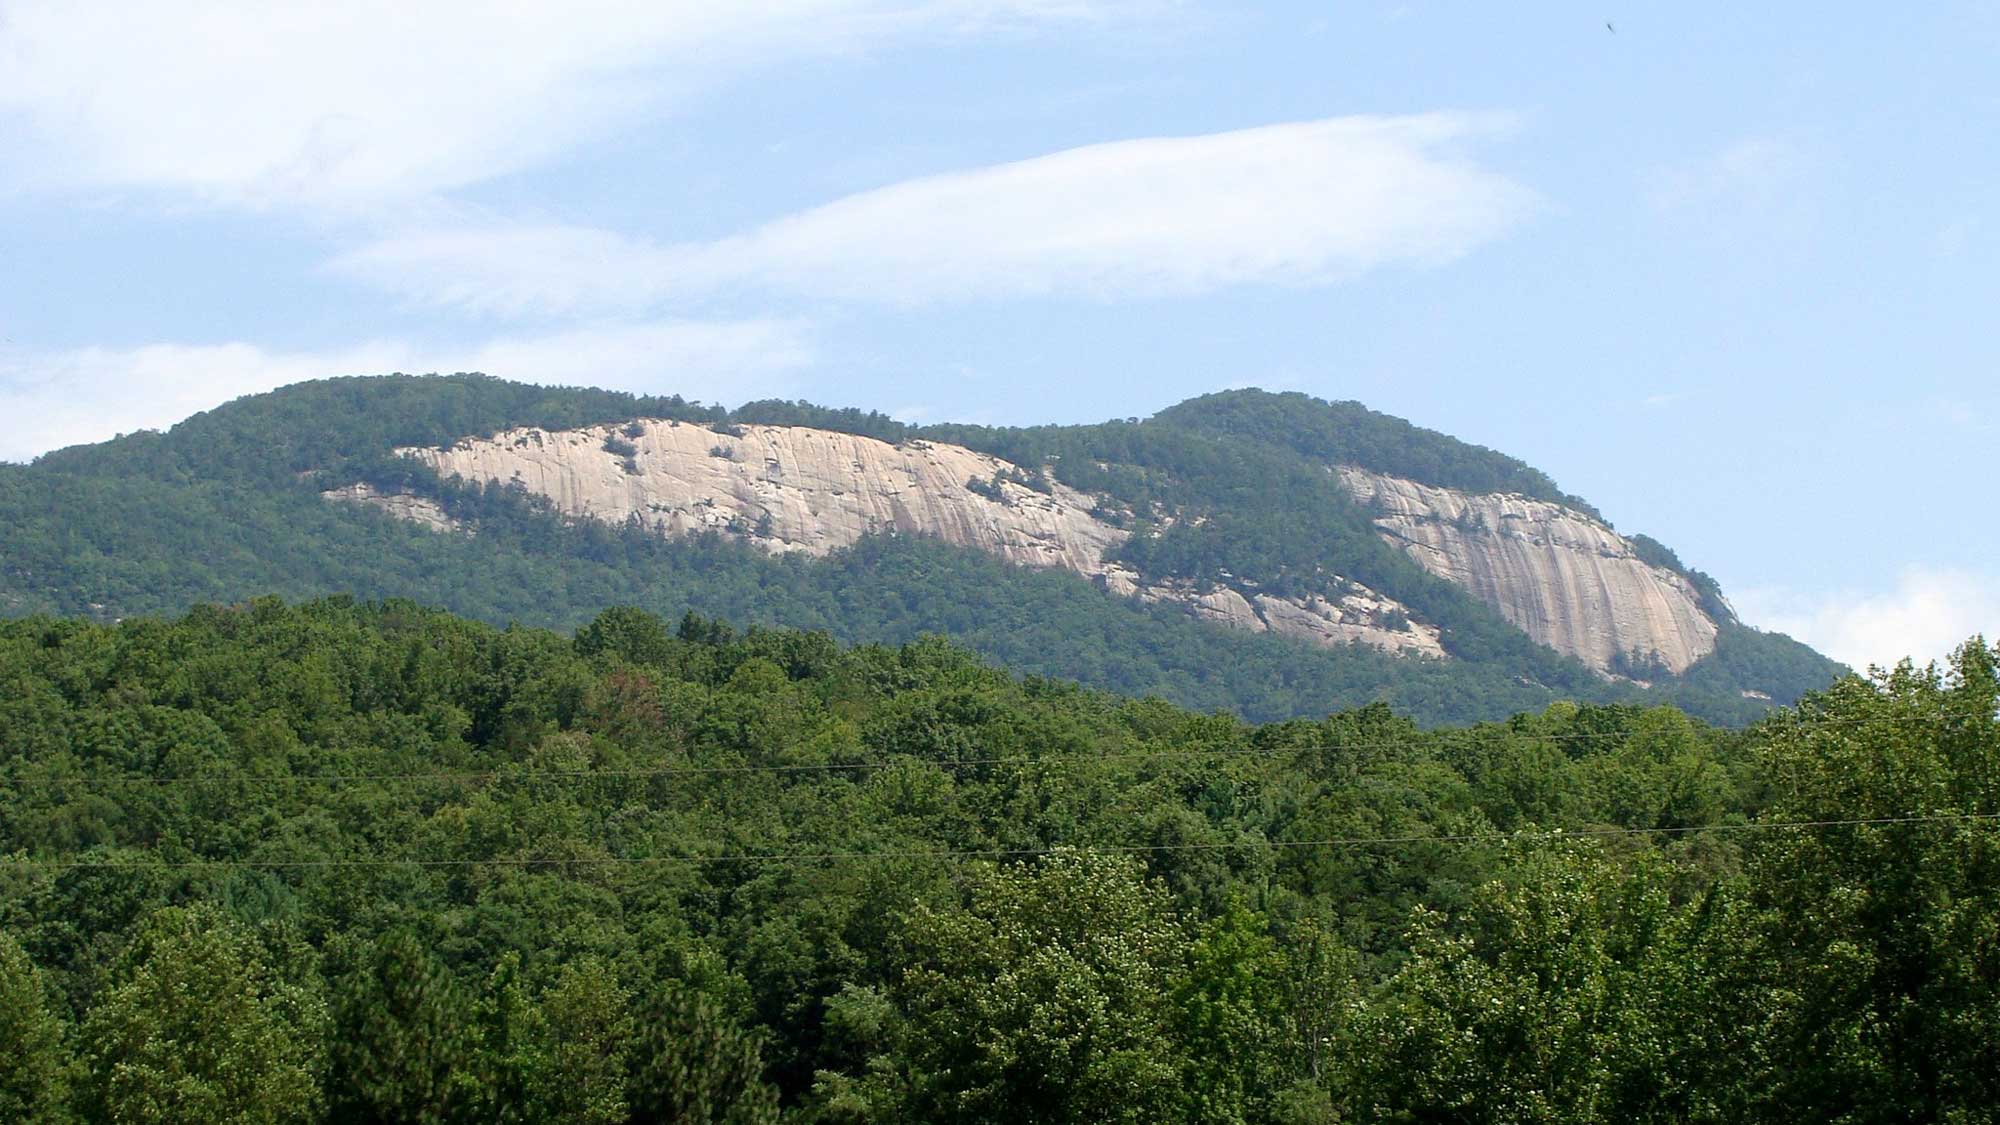 Photograph of Table Rock Mountain in South Carolina.